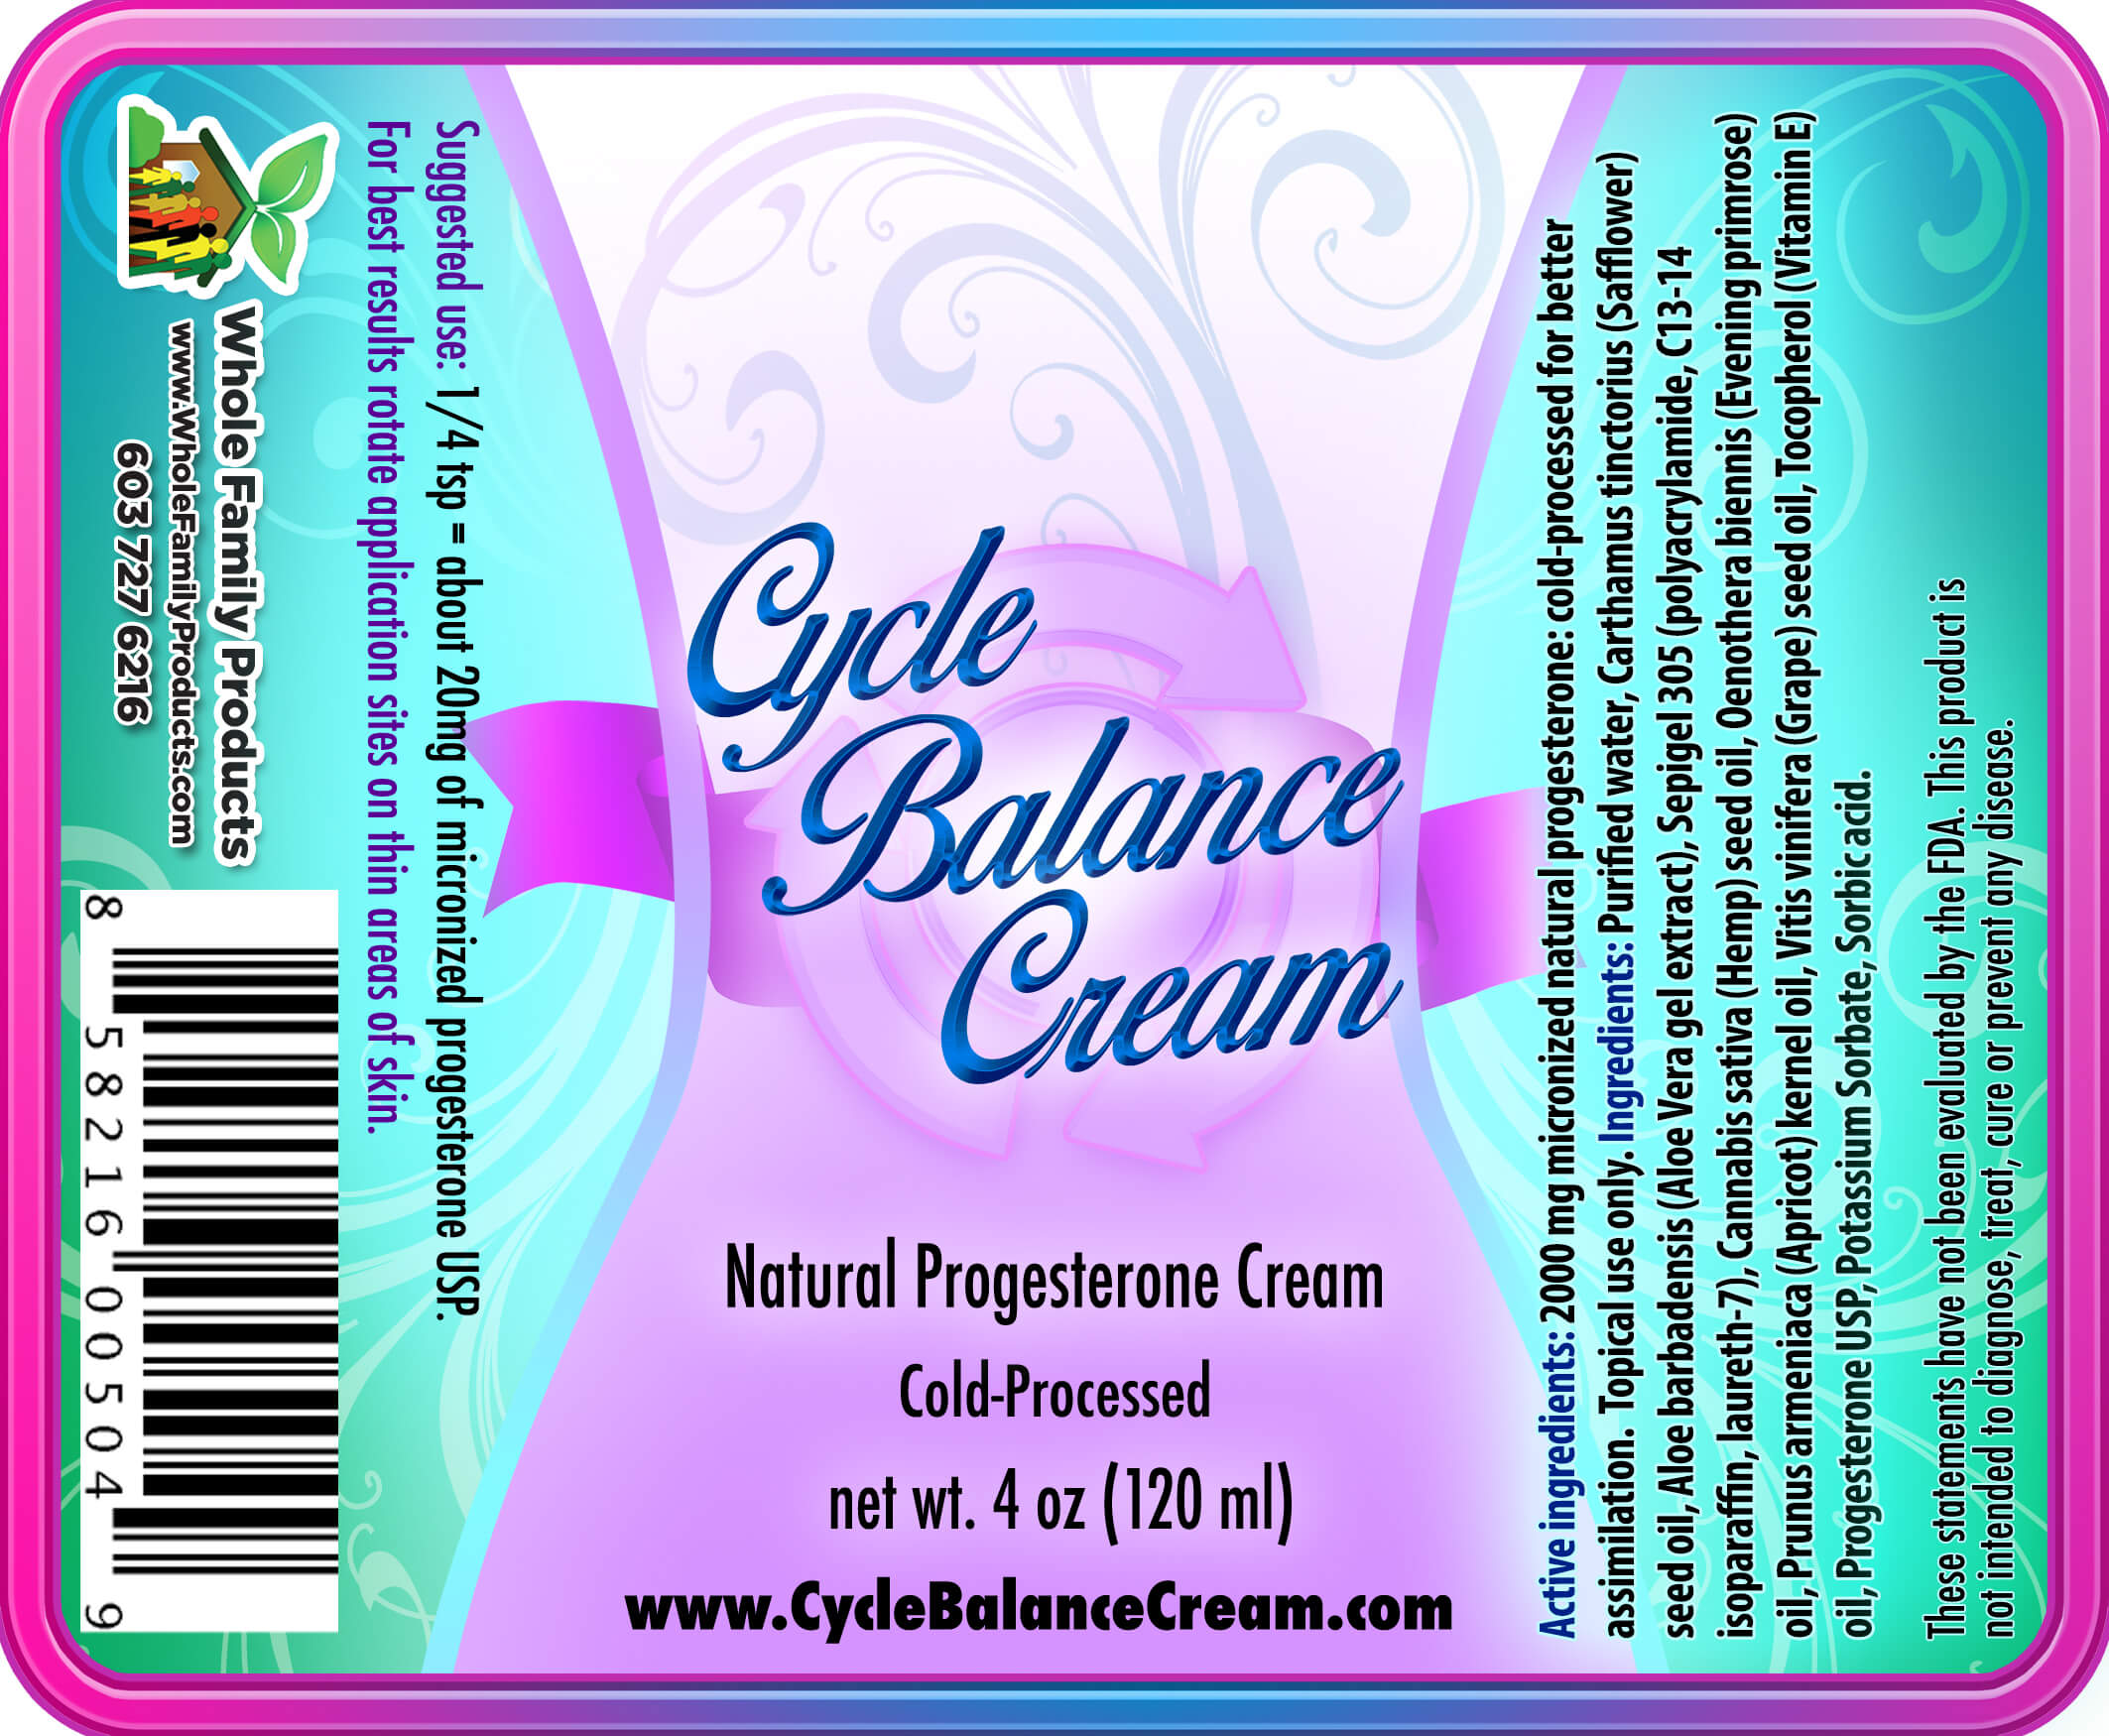 Cycle Balance Cream 4 oz pump Label